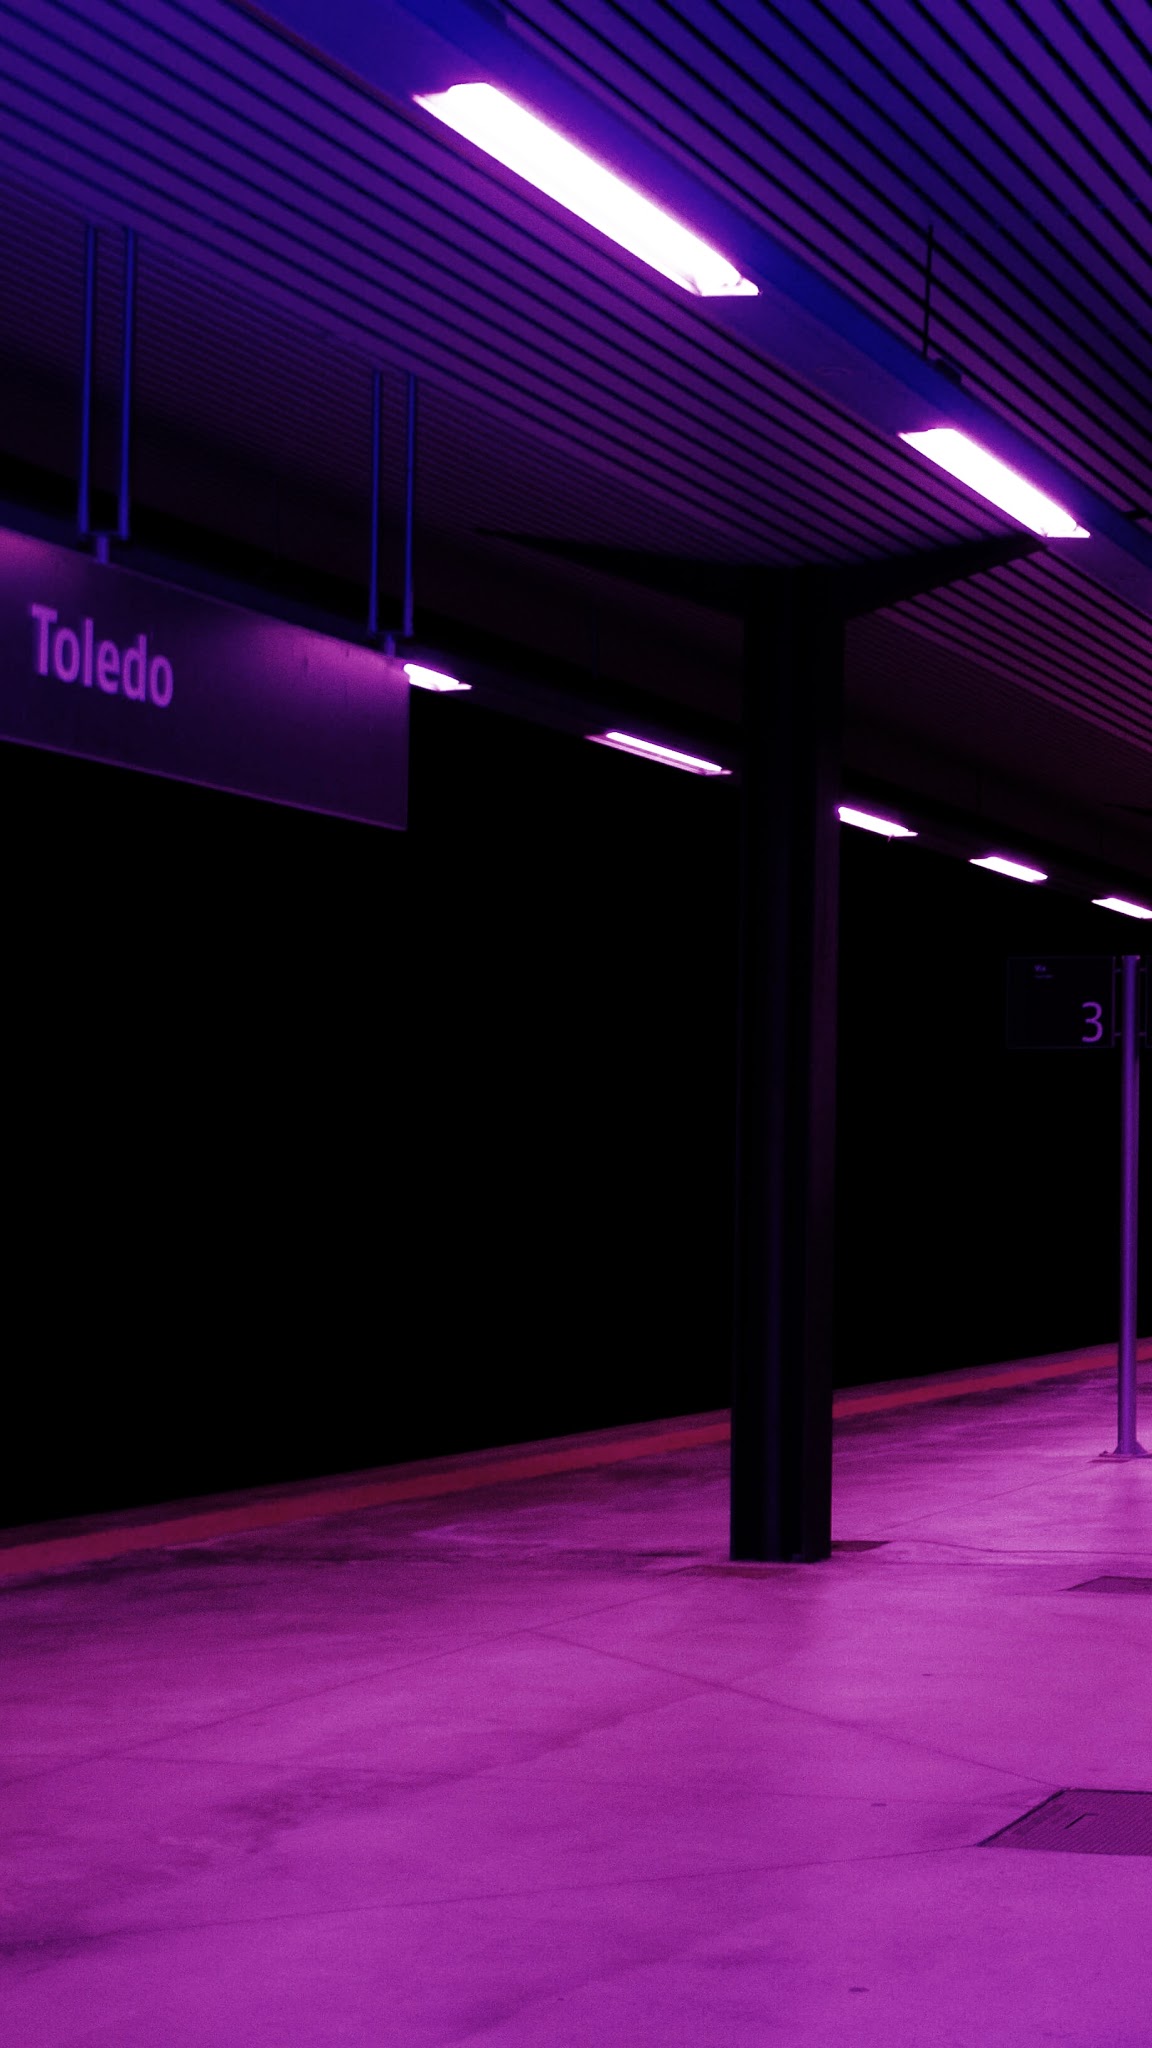 Dark Subway Station Isolation 1152x2048